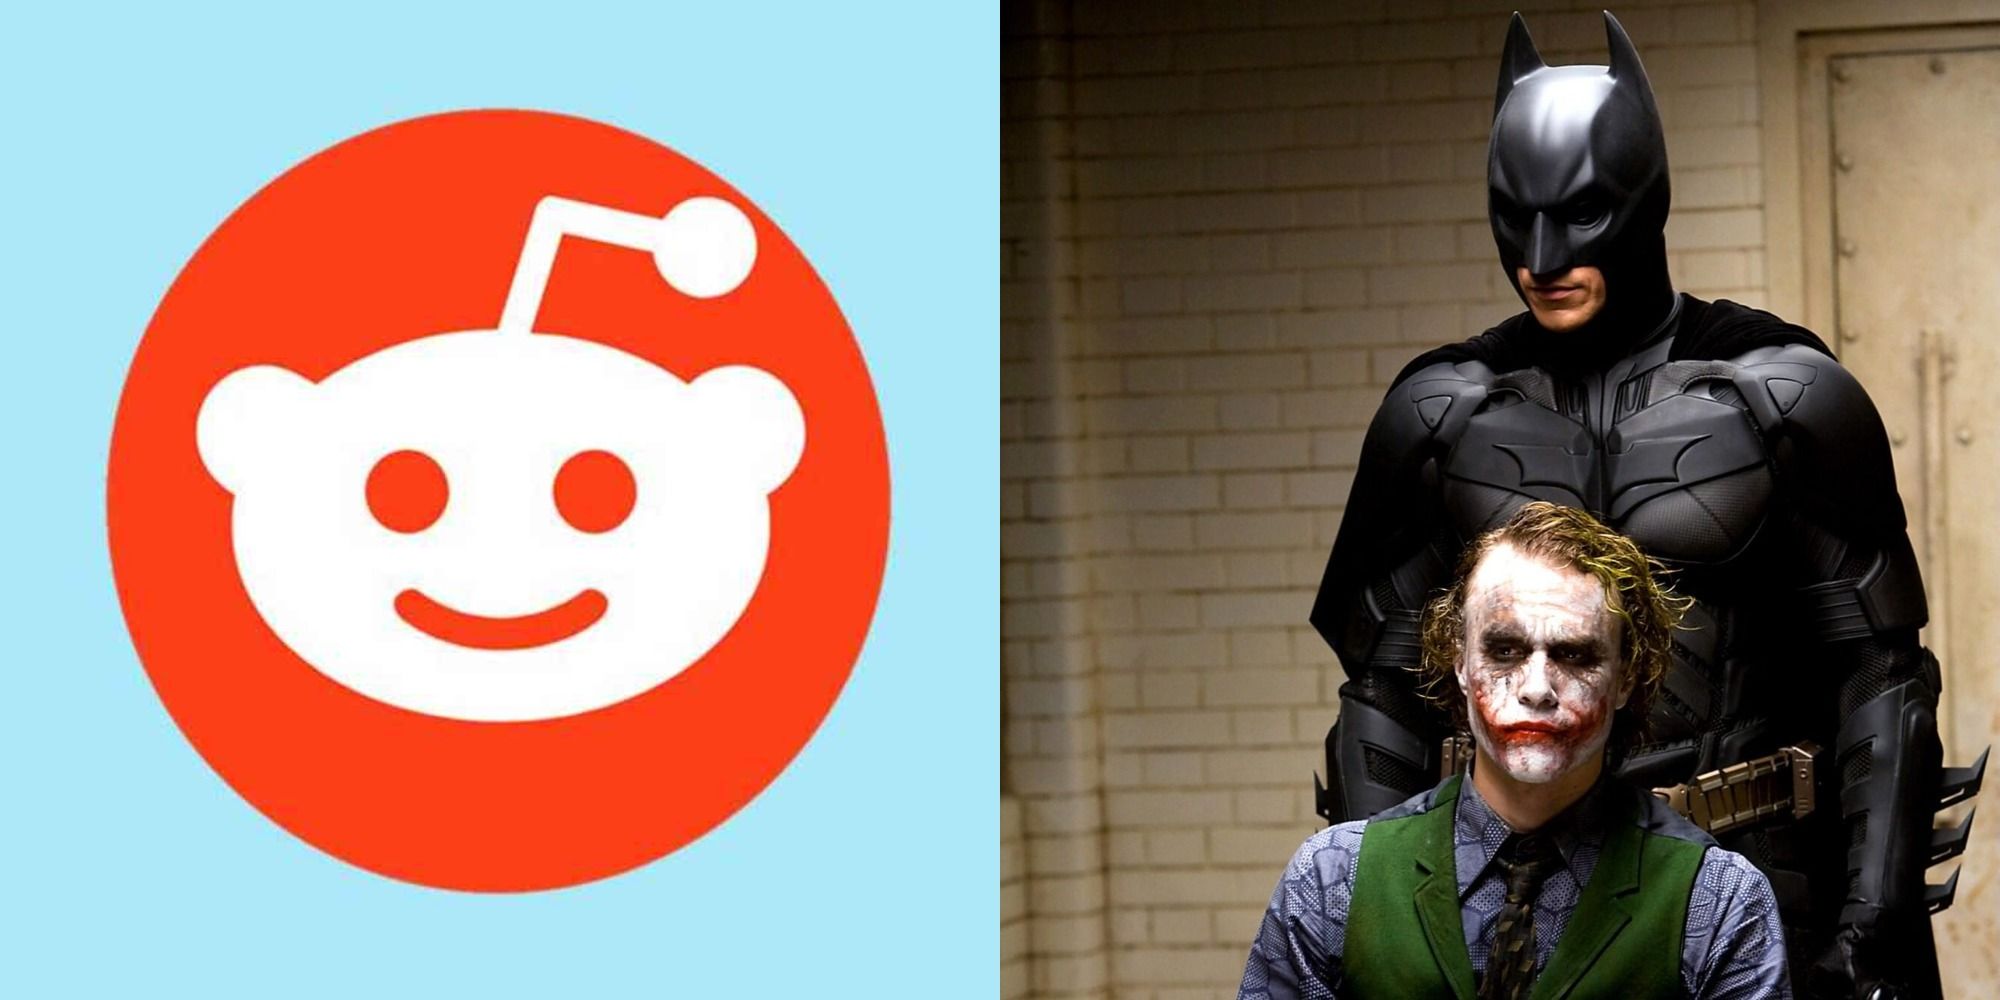 Split image showing the Reddit logo and Batman and Joker in The Dark Knight